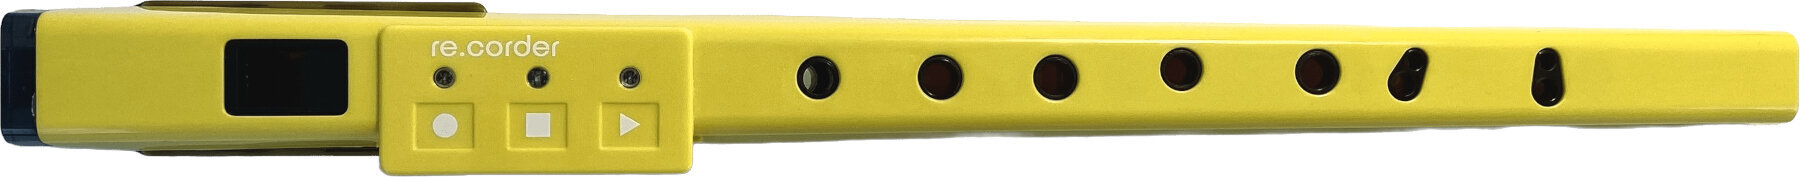 Instrument à vent hybride Artinoise Re.corder Yellow Instrument à vent hybride